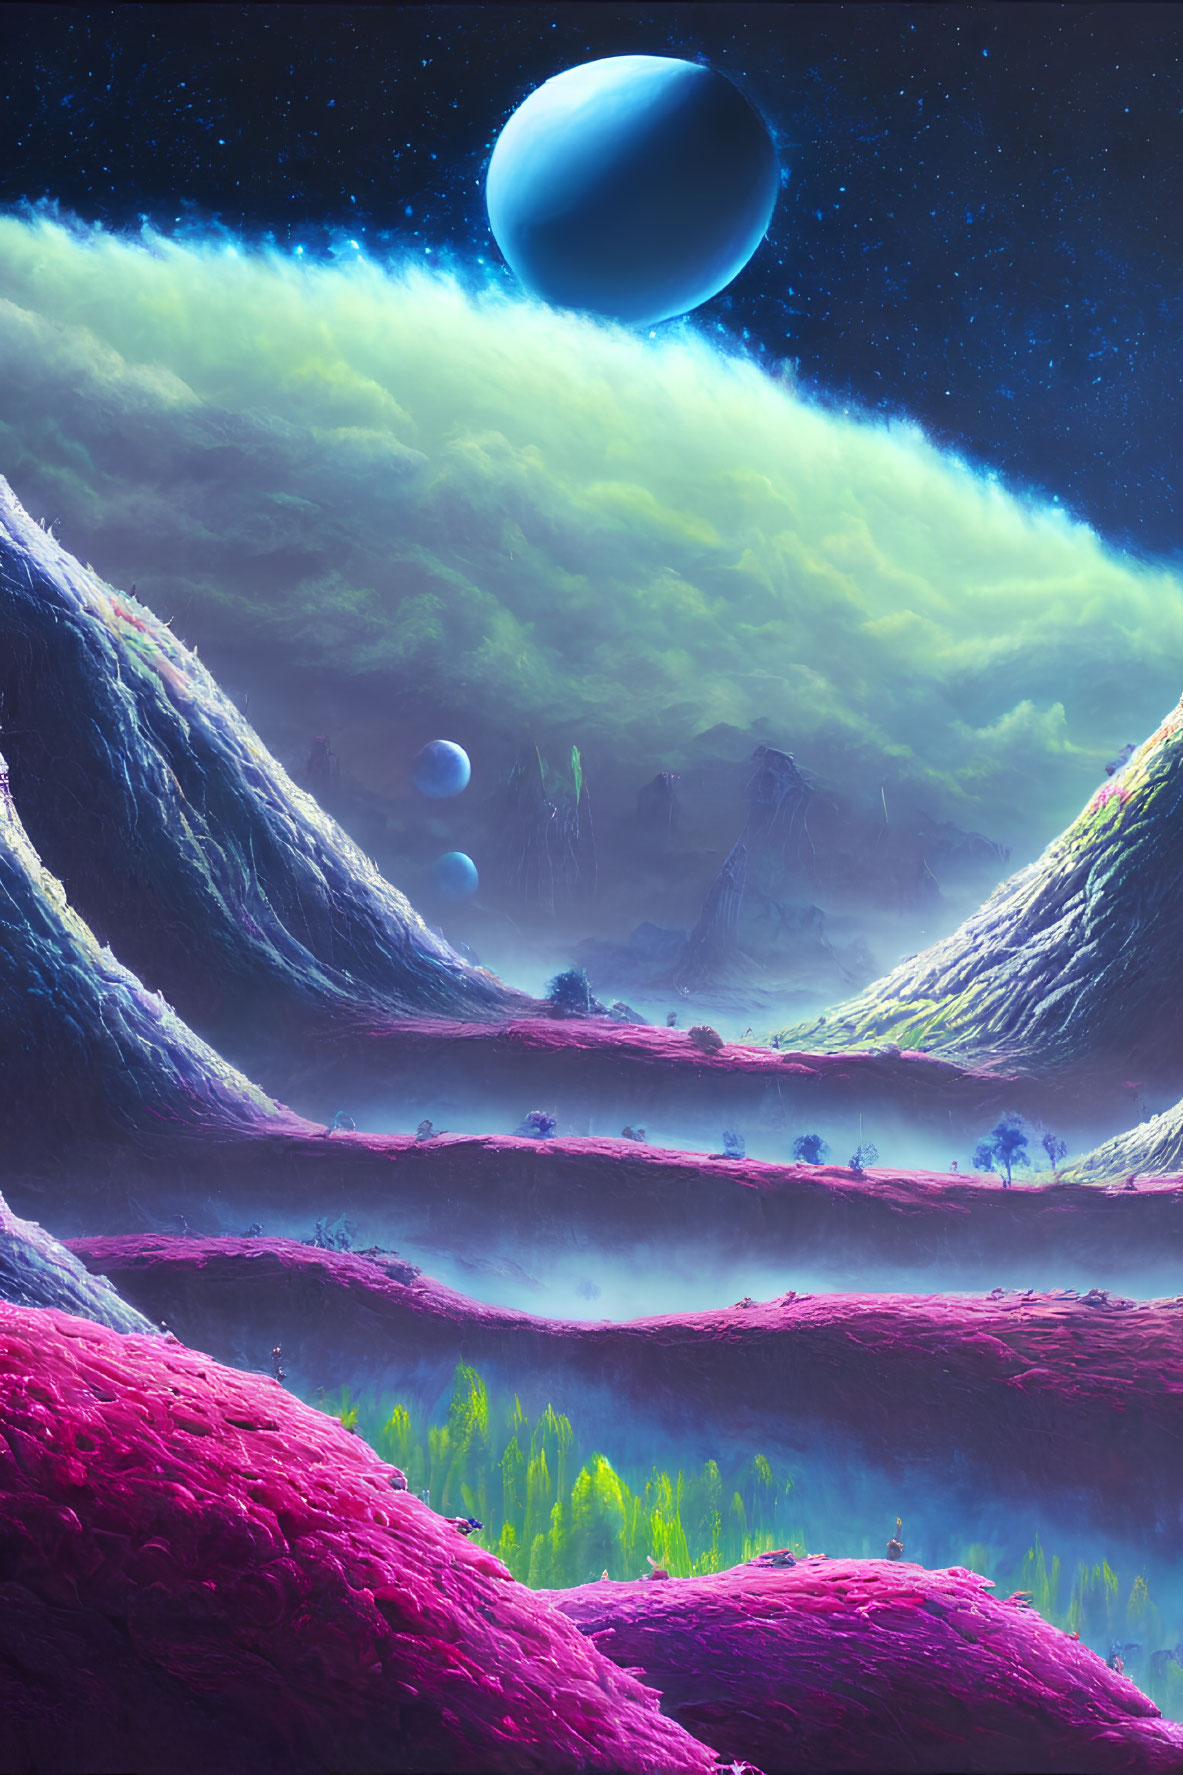 Pink Terrain and Celestial Bodies in Sci-Fi Landscape